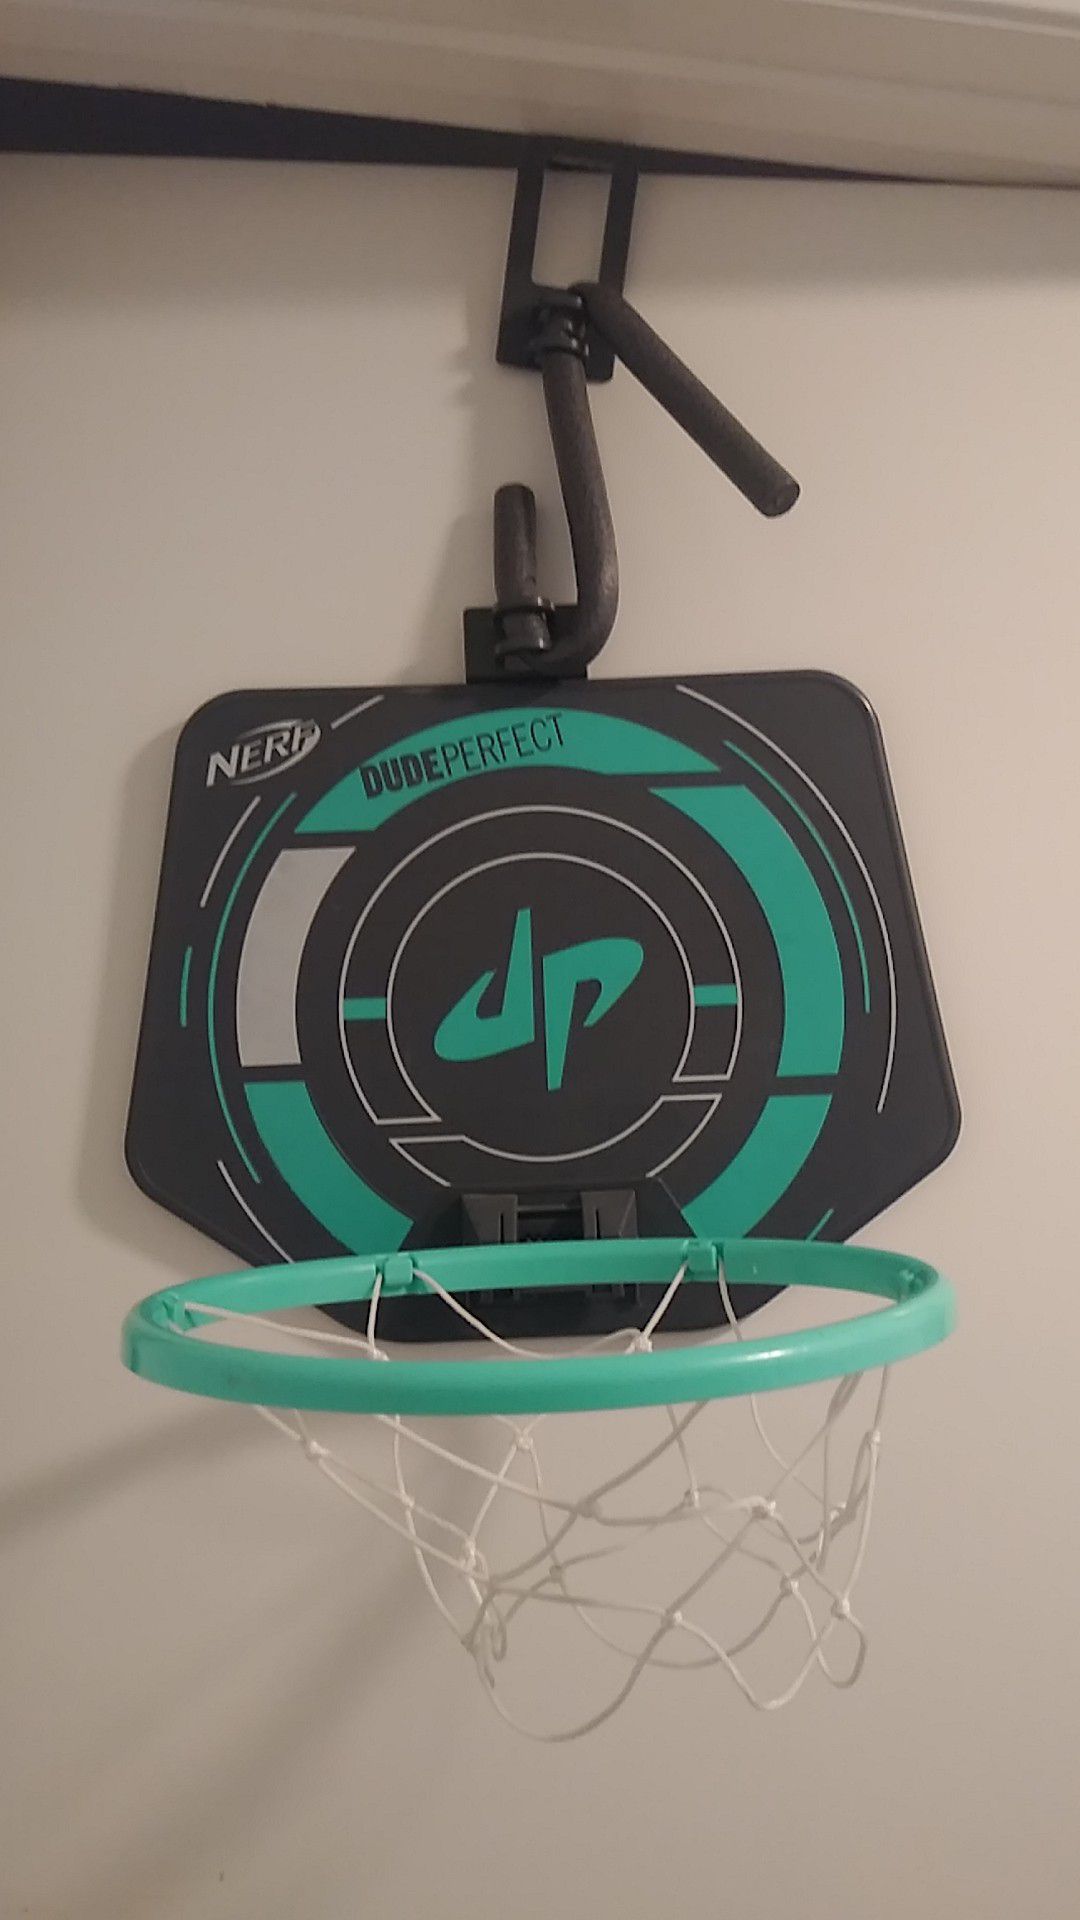 Dude perfect mini basketball net for kids